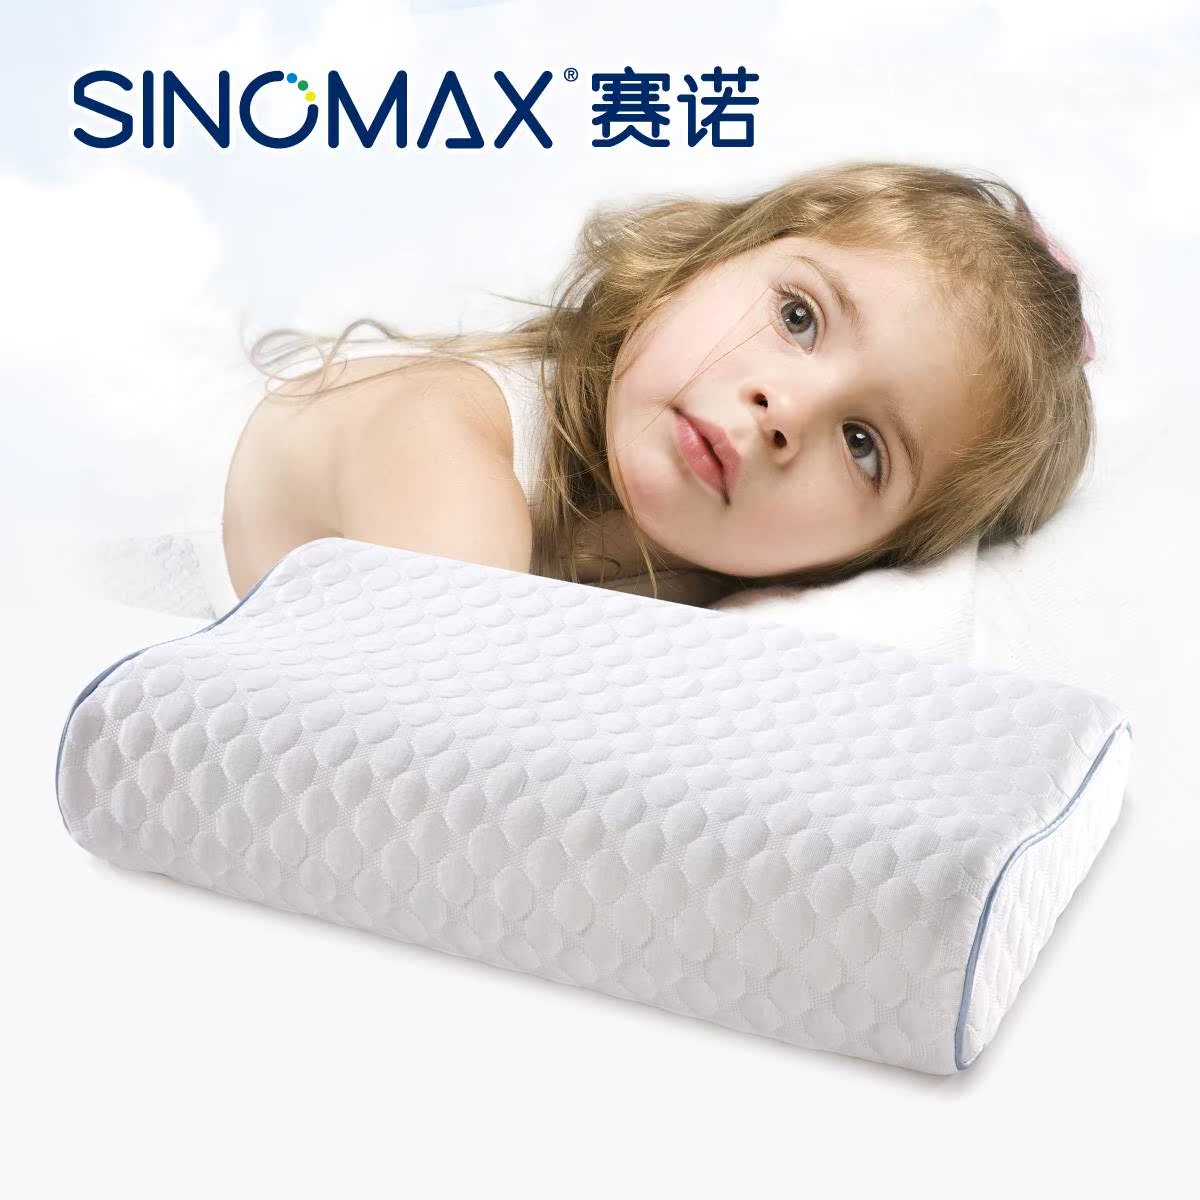 SINOMAX赛诺4D枕二代一代/大/小号/碧蓝/美梦/睡安猪冰凉枕套